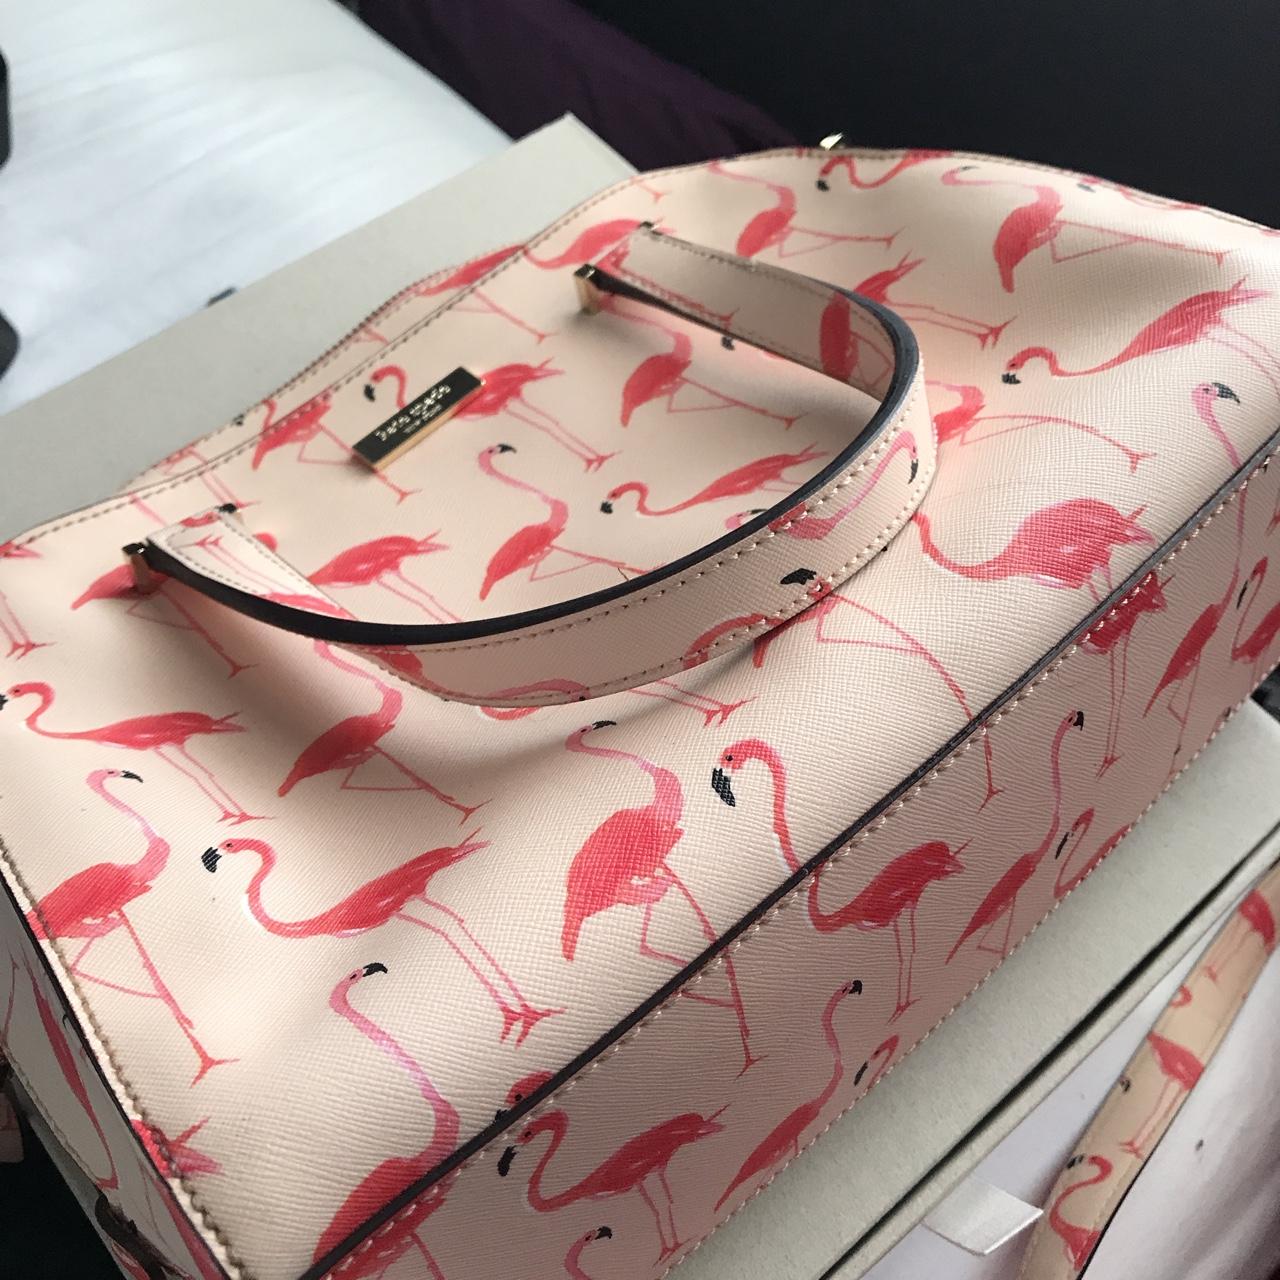 kate spade new york Flamingo Bags & Handbags for Women for sale